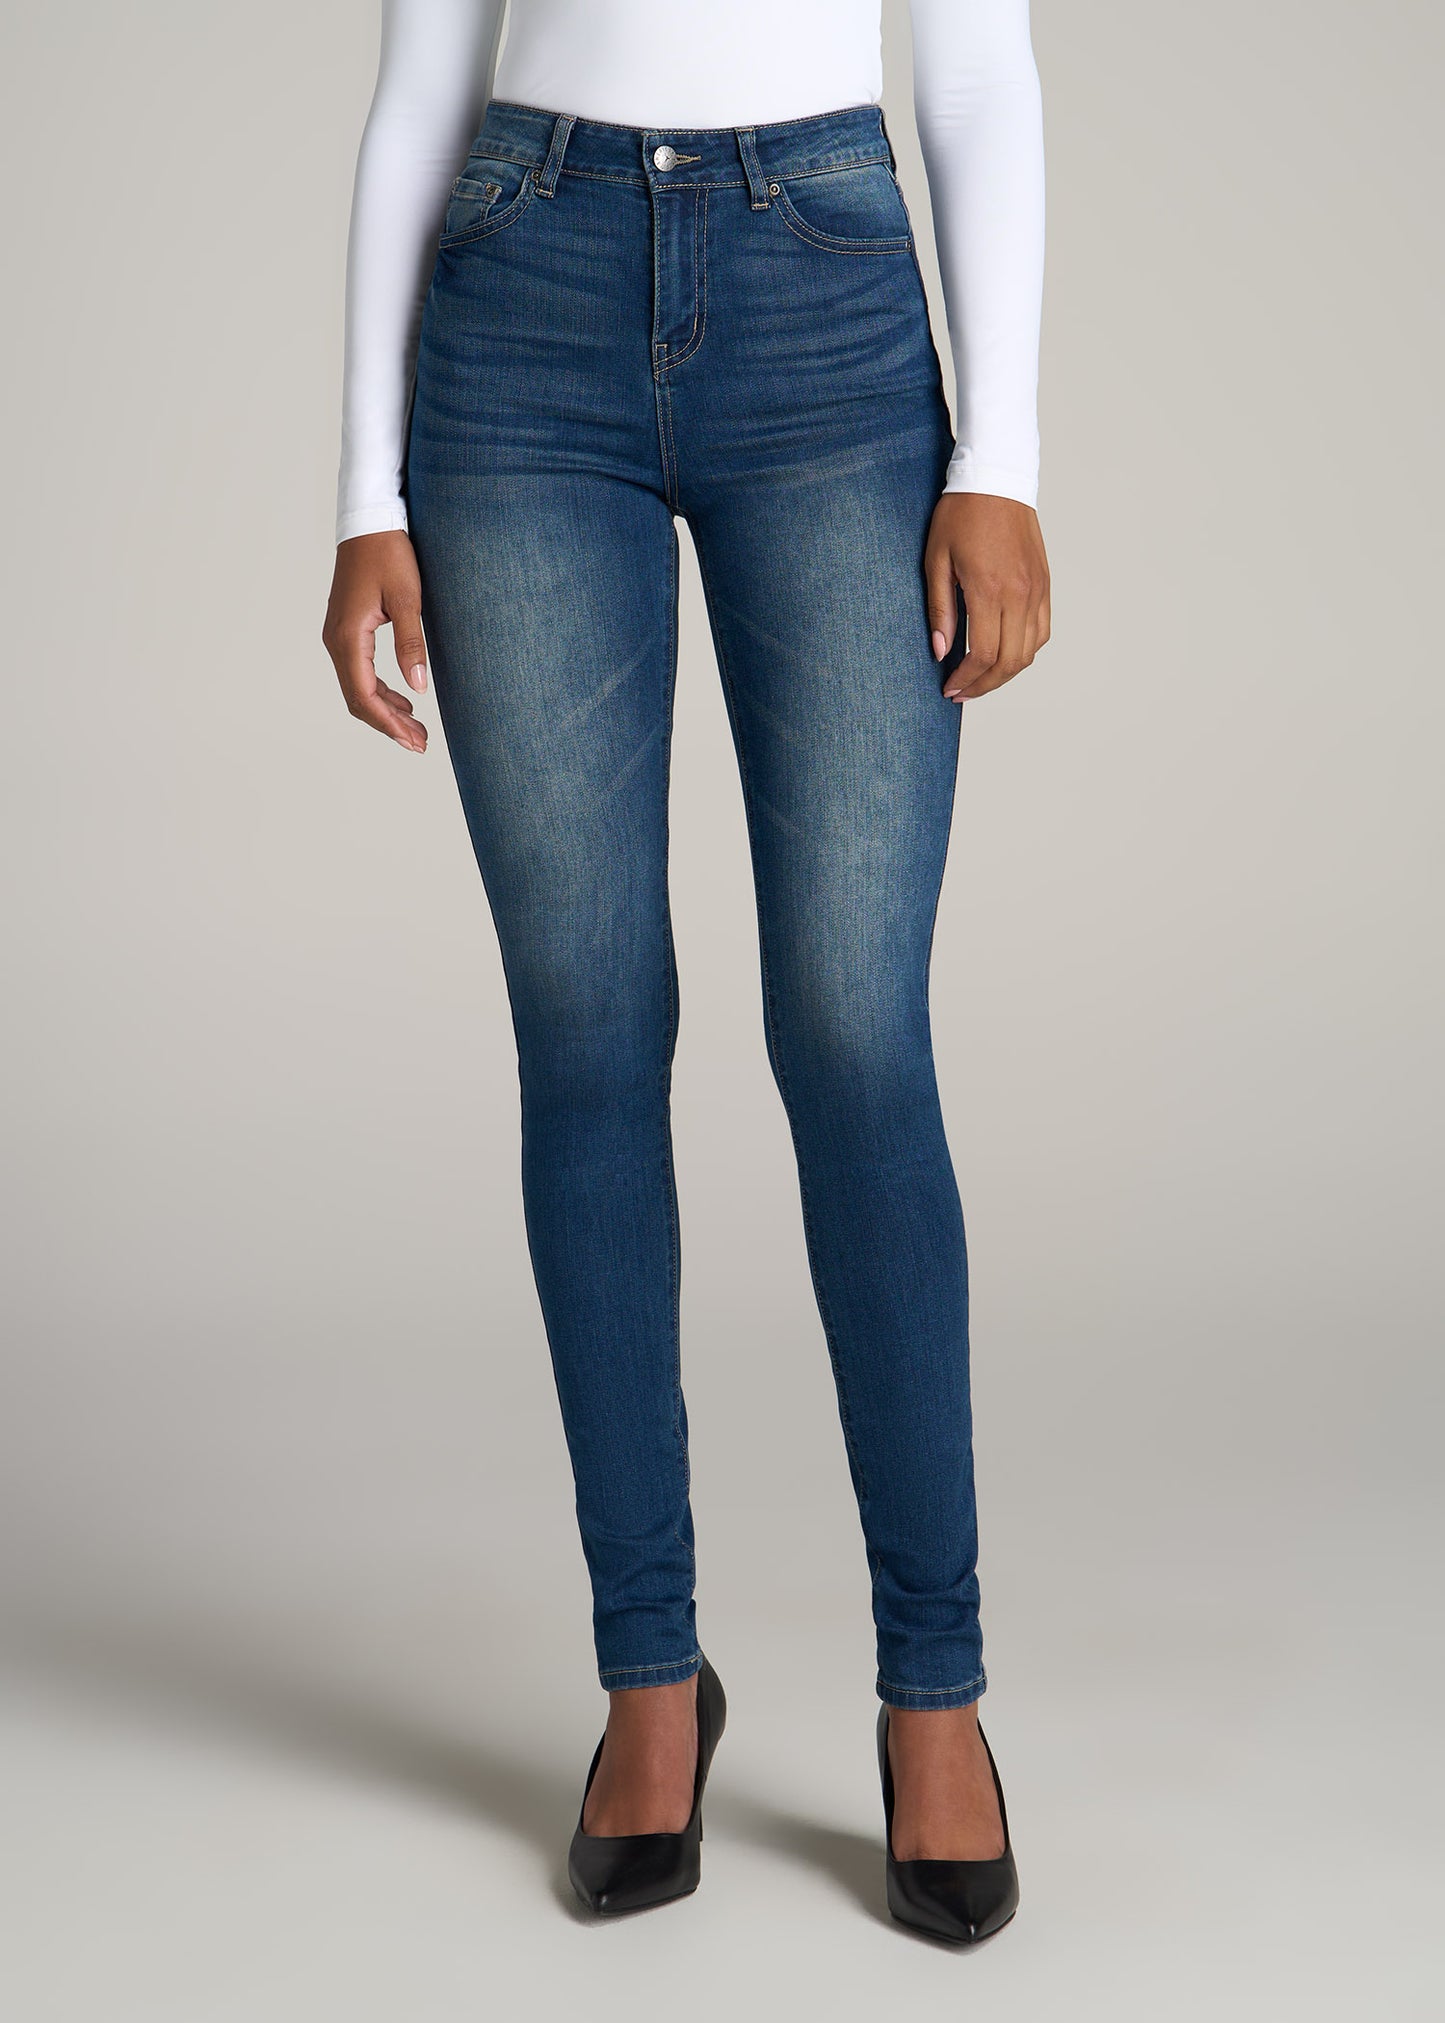 Levi's Women's Skinny Jeans (21306-0557_Dark Indigo_26) : Amazon.in: Fashion